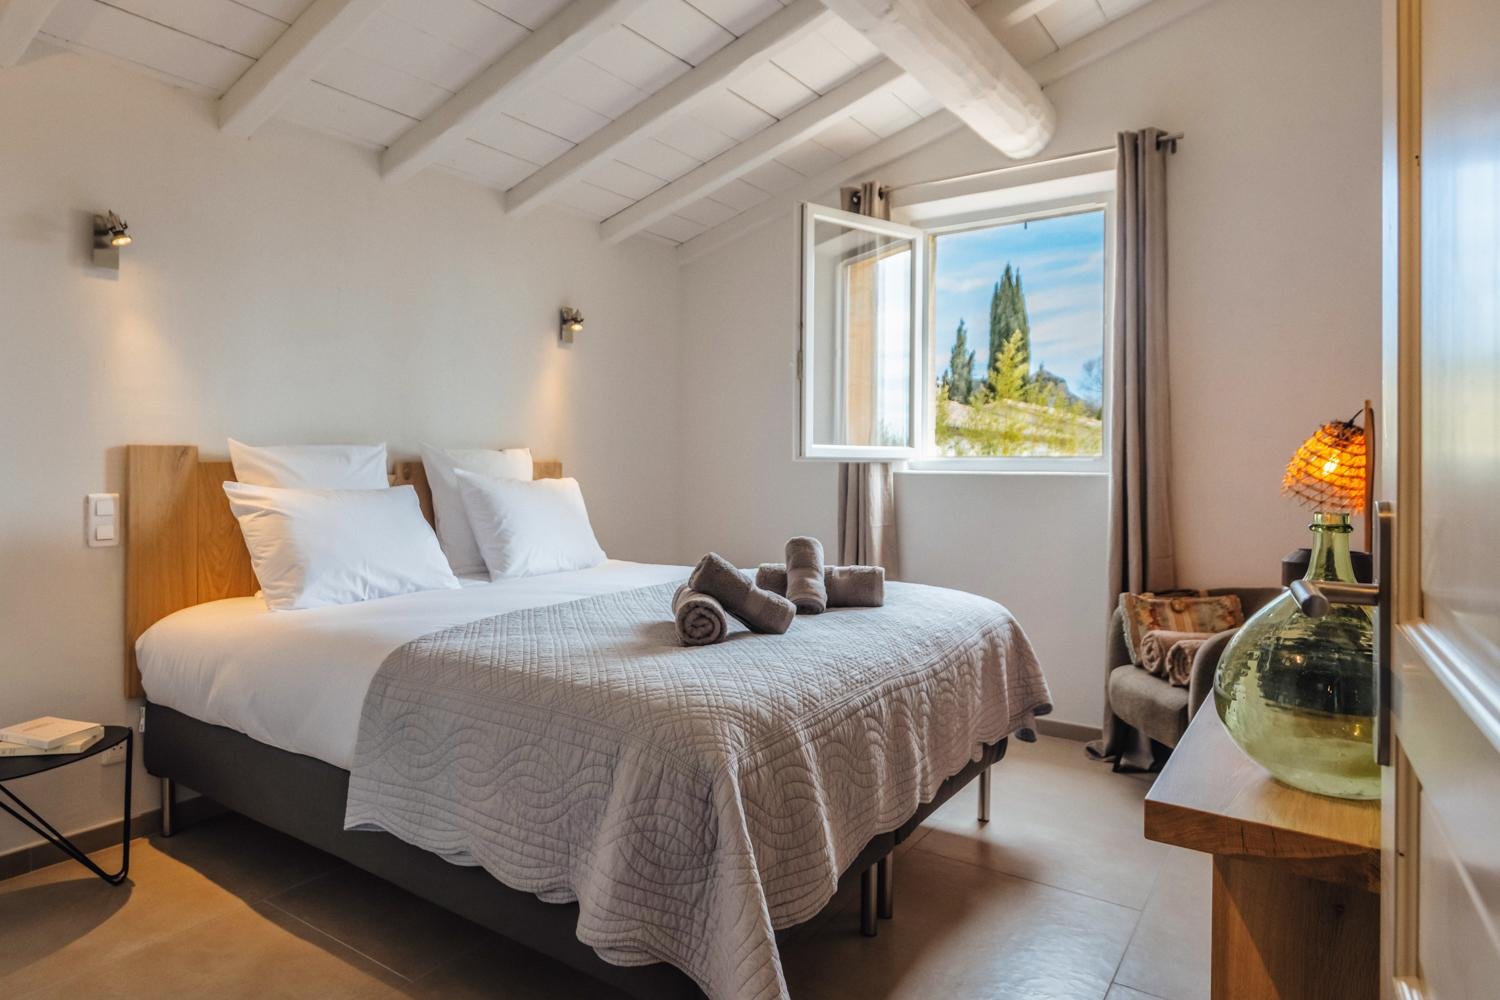 Francis York Dreamy Mas in the Alpilles, Provence Available as a Luxury Villa Rental 00026.jpg